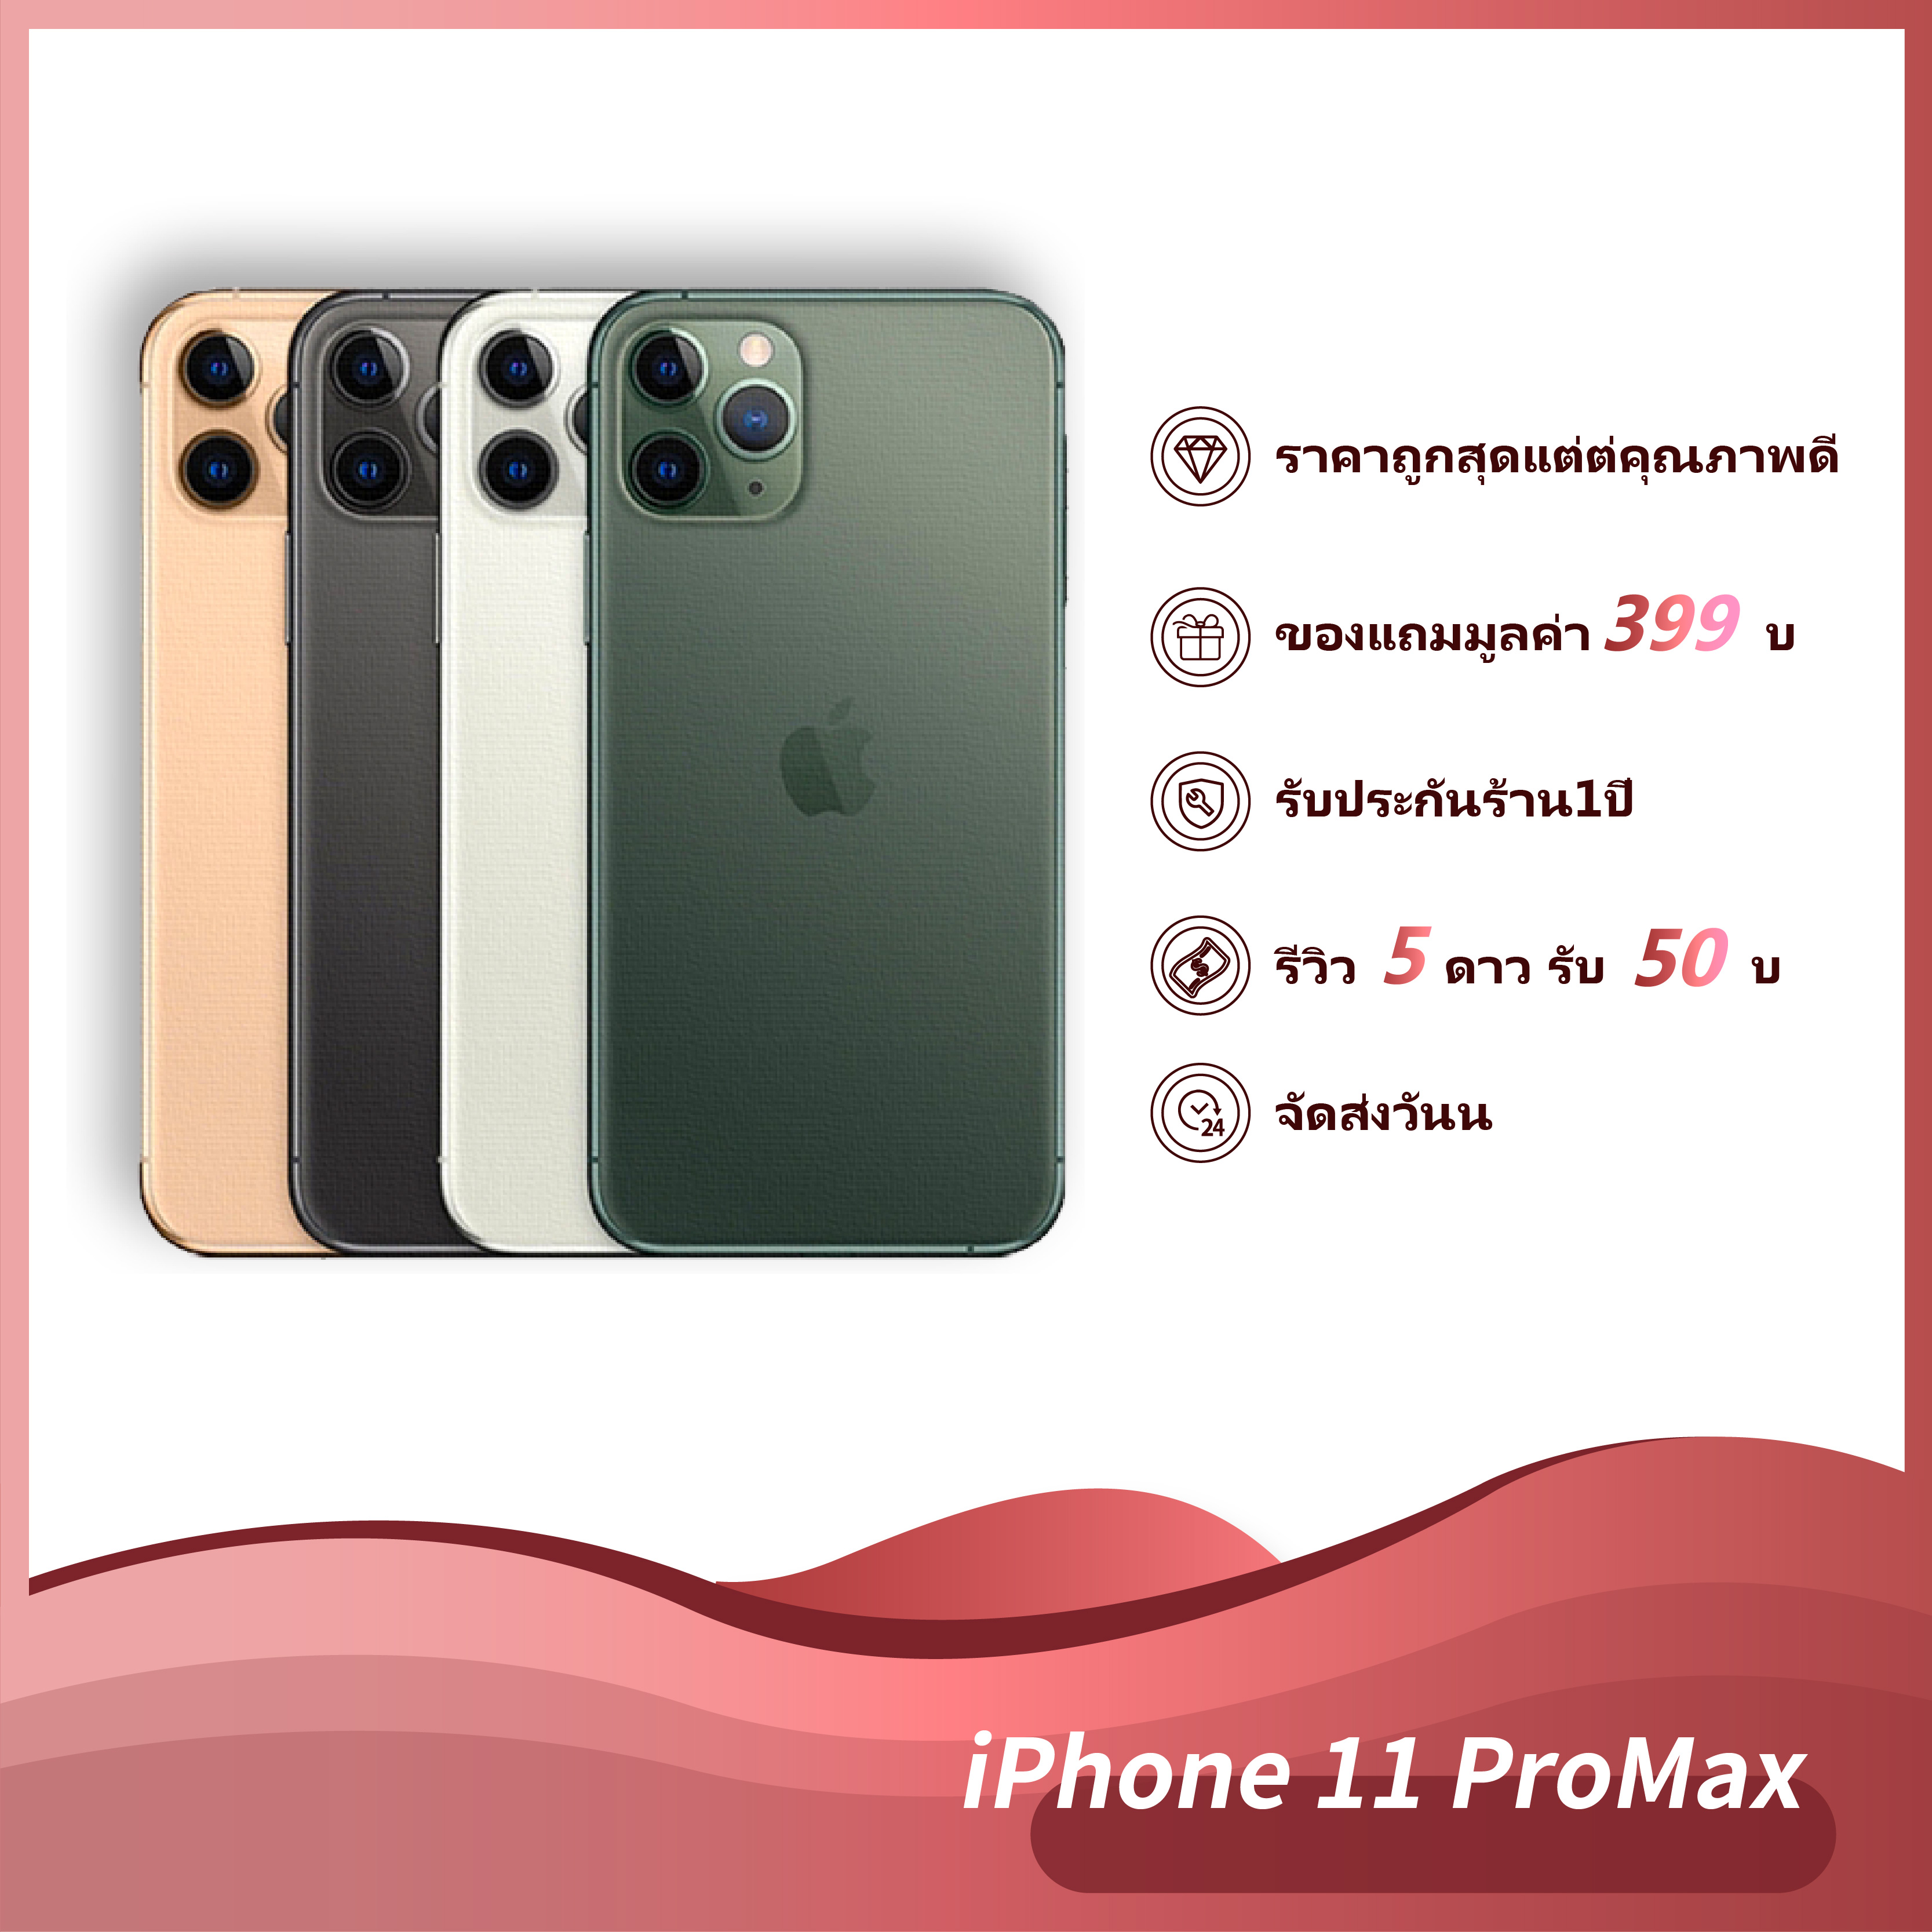 Iphone 11 Pro 256 512gb ถูกที่สุด พร้อมโปรโมชั่น - ส.ค. 2021 | BigGo เช็คราคาง่ายๆ